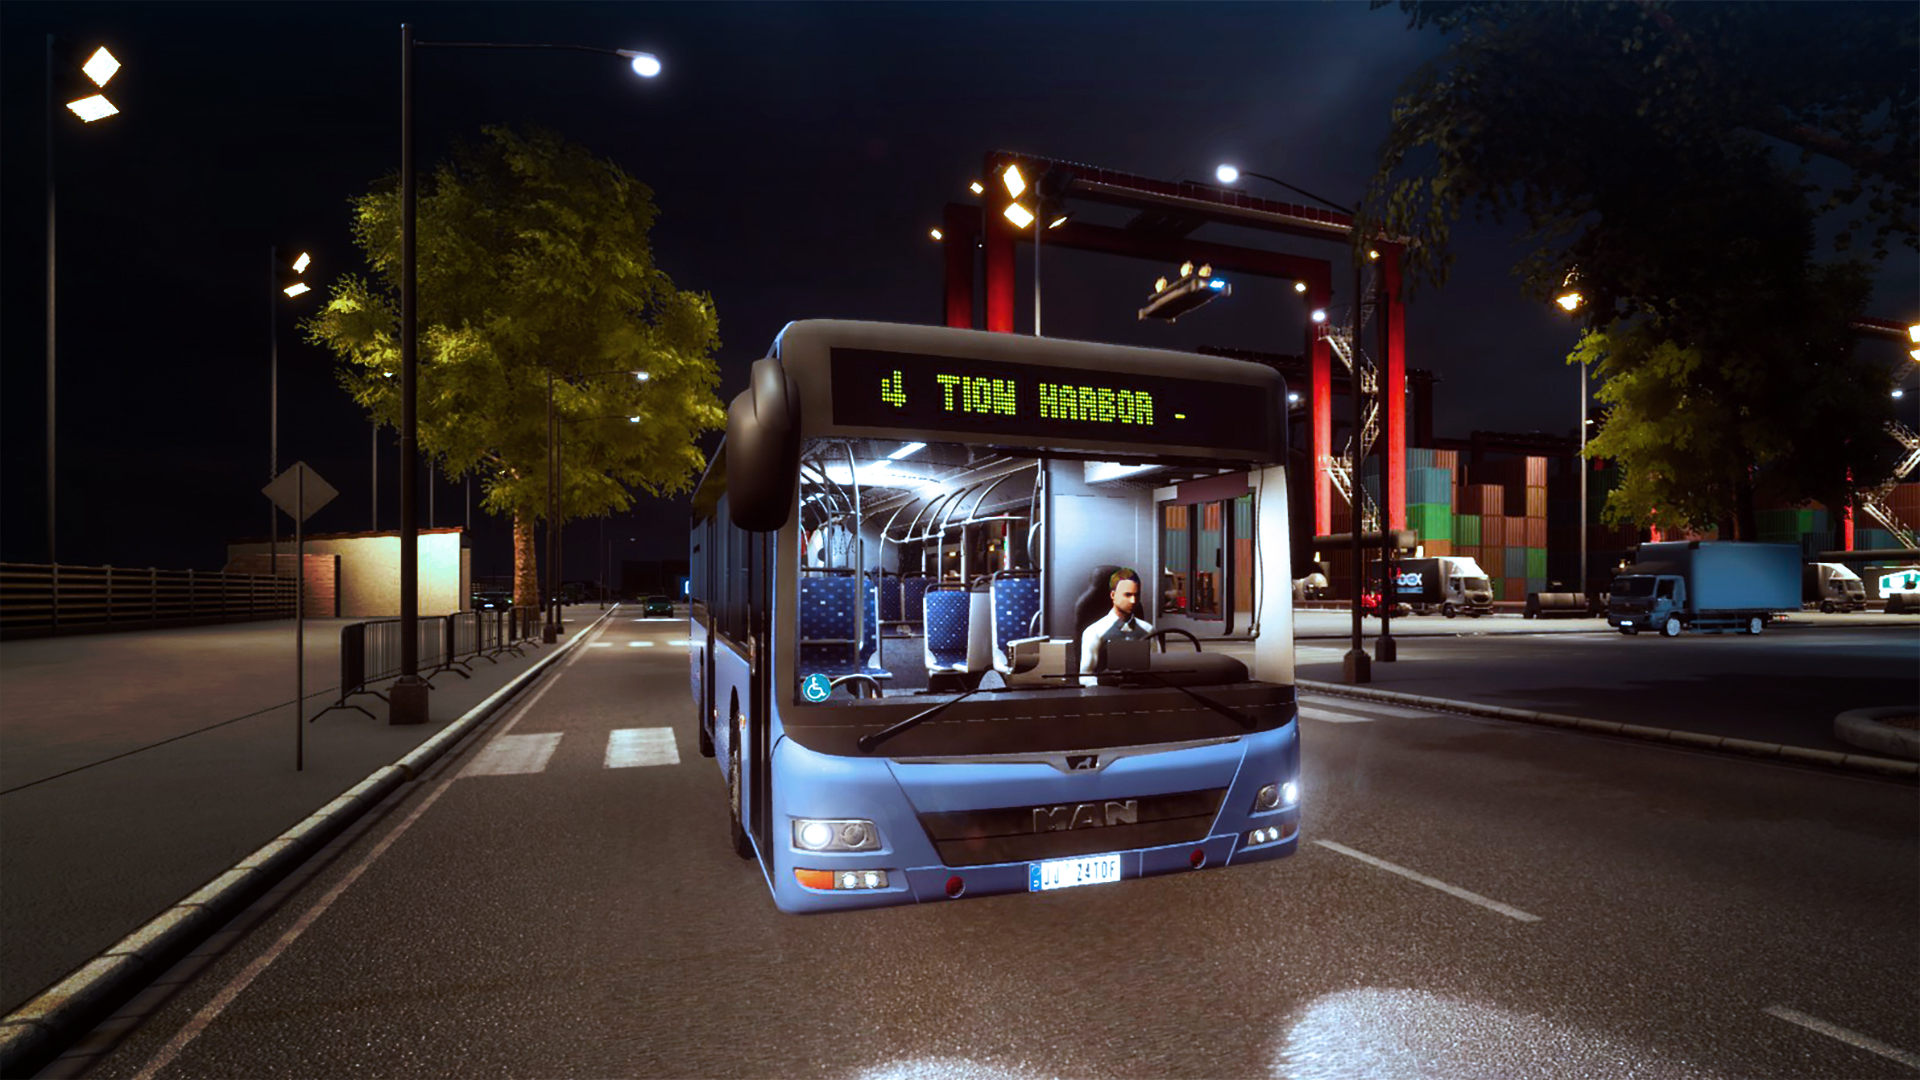 bus simulator 18 dev